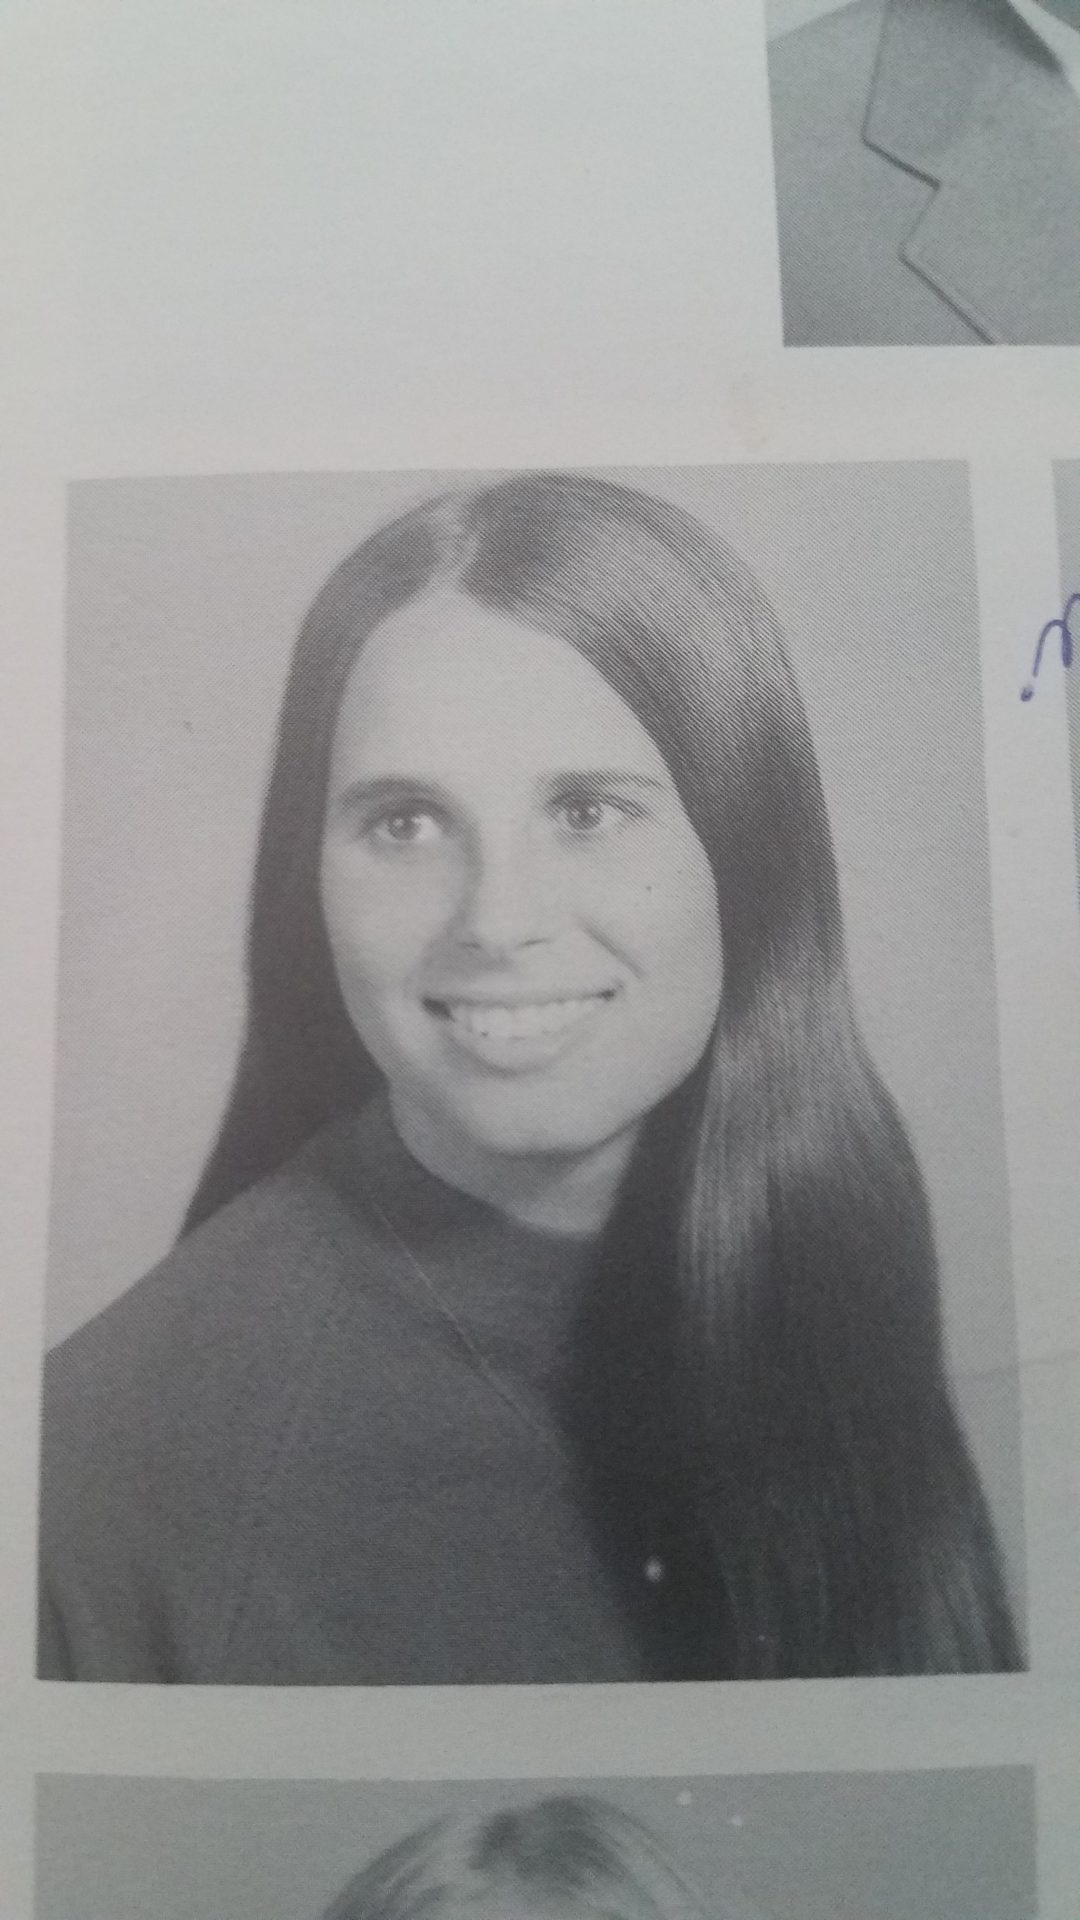 Sheila Mann<br />
1973 senior picture